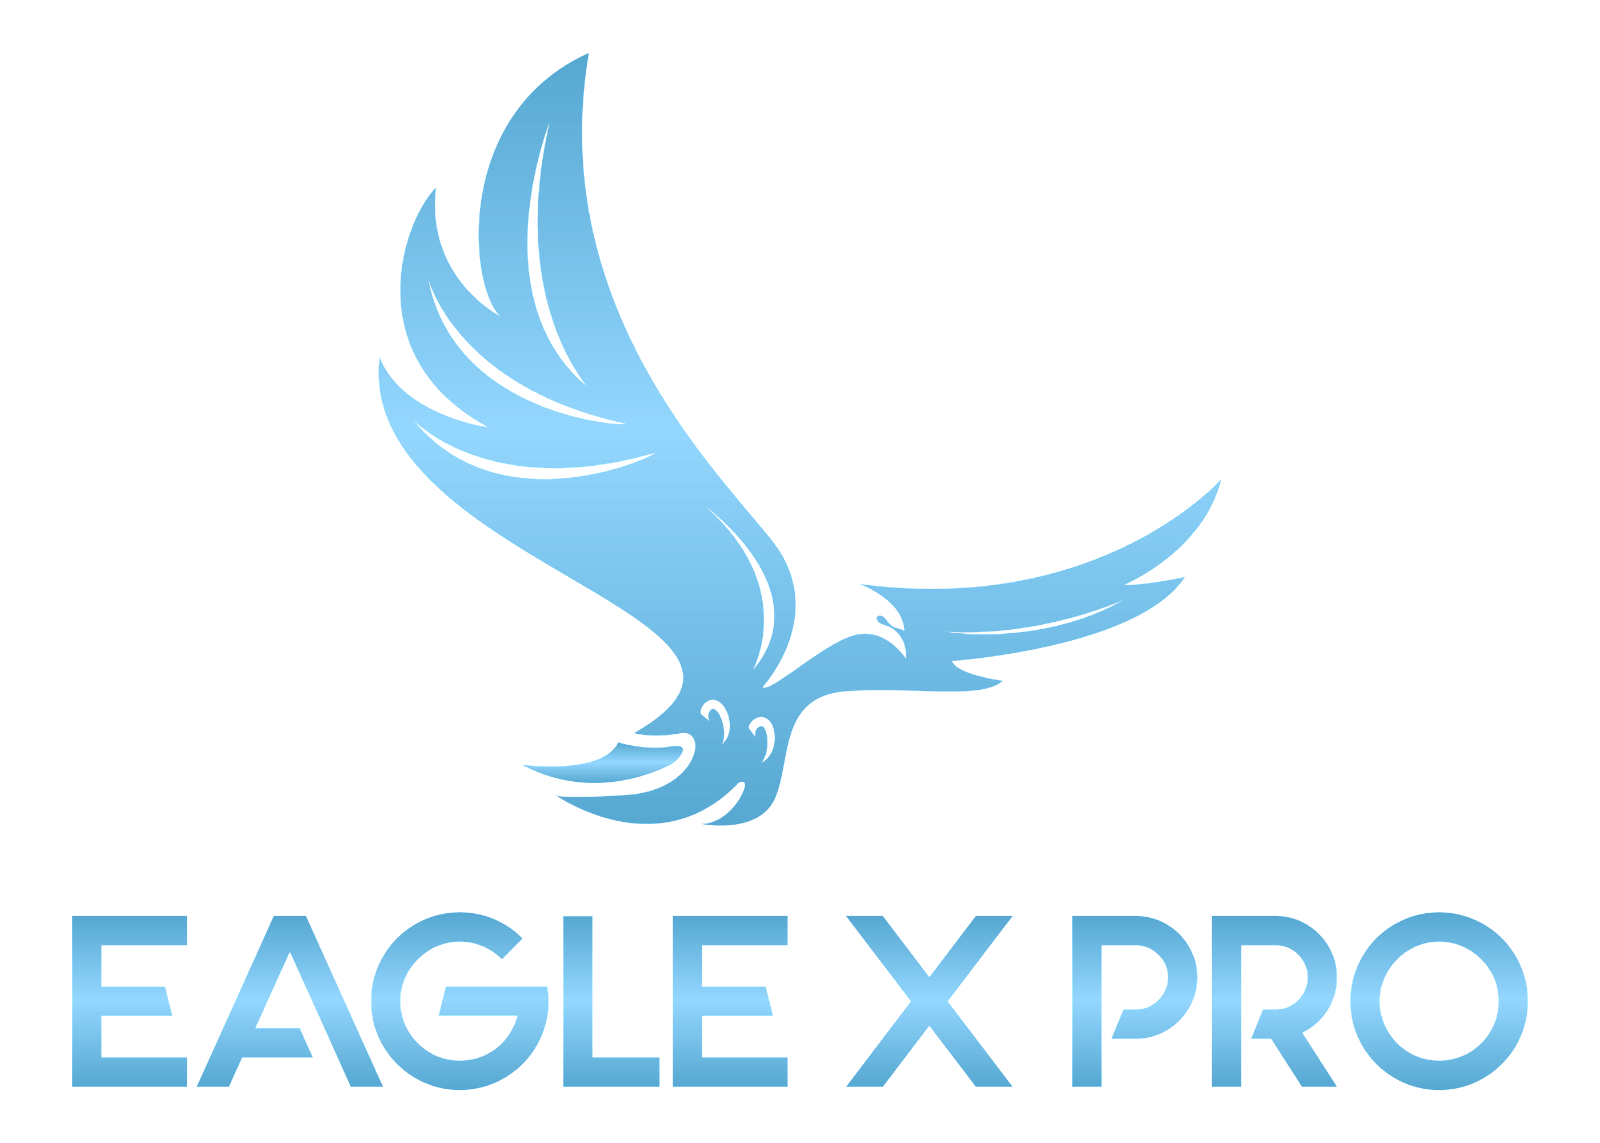 Eagle X Pro logo